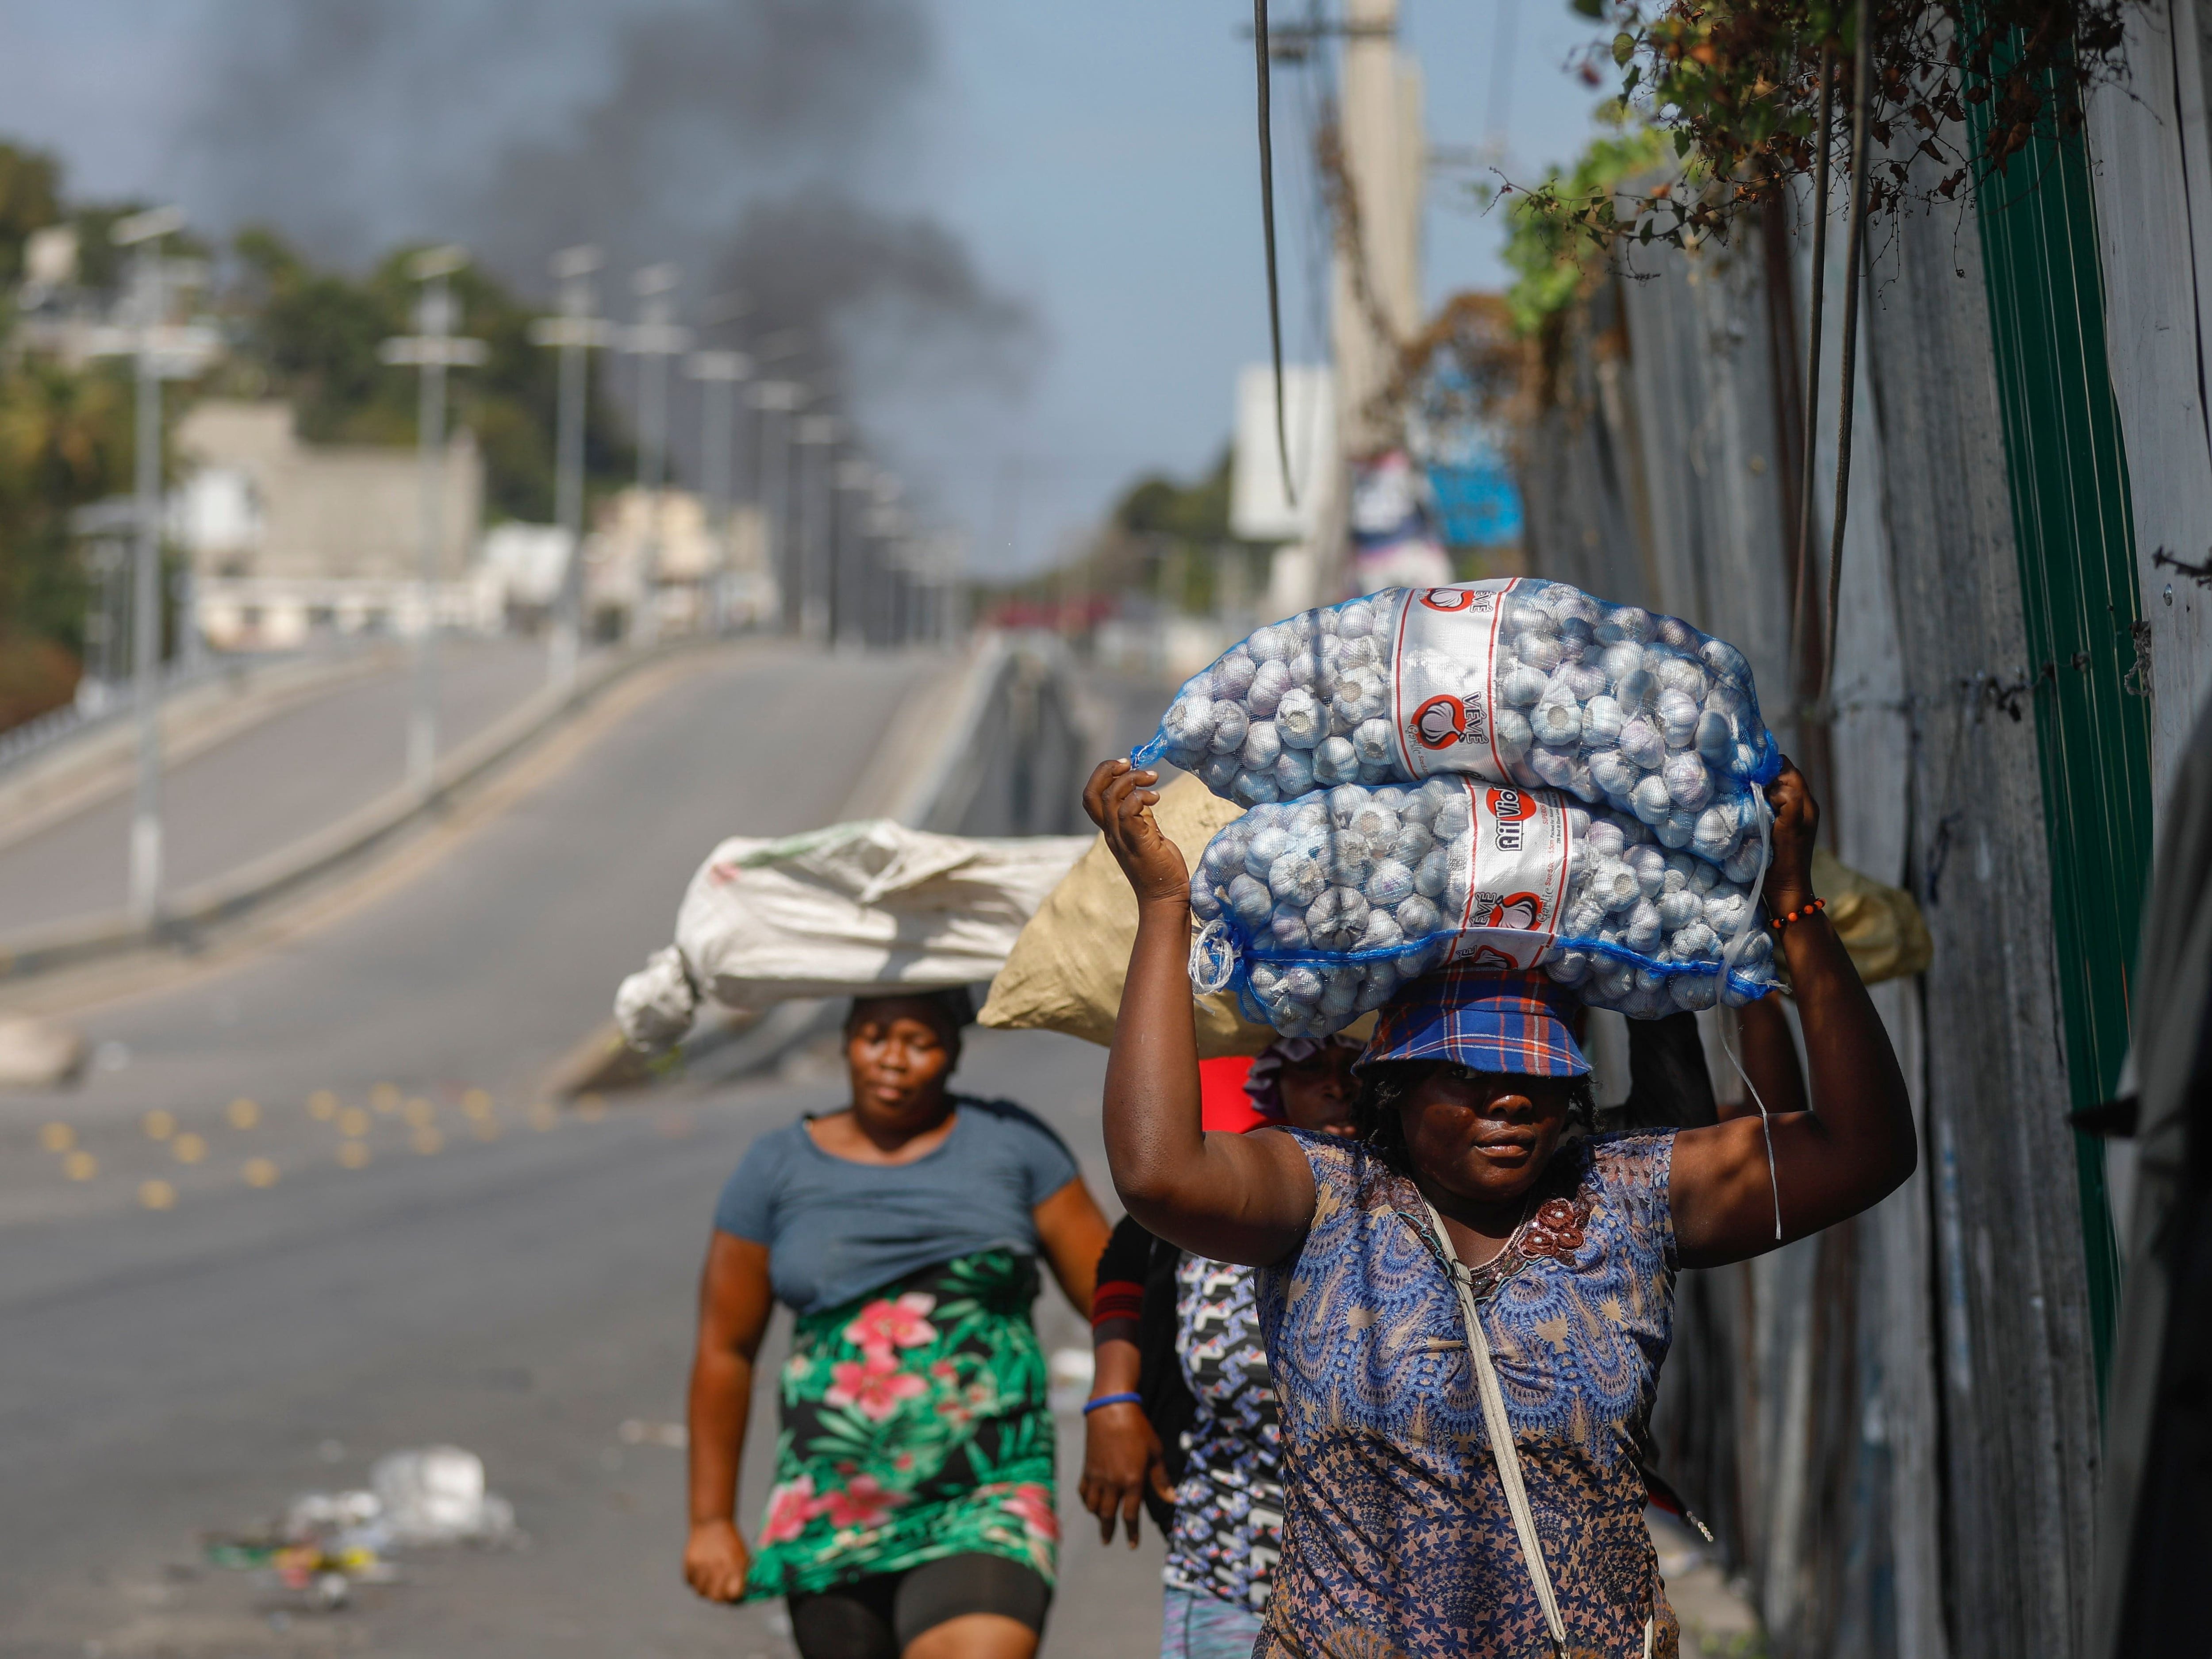 Haitians struggle to secure basic goods amid gang violence